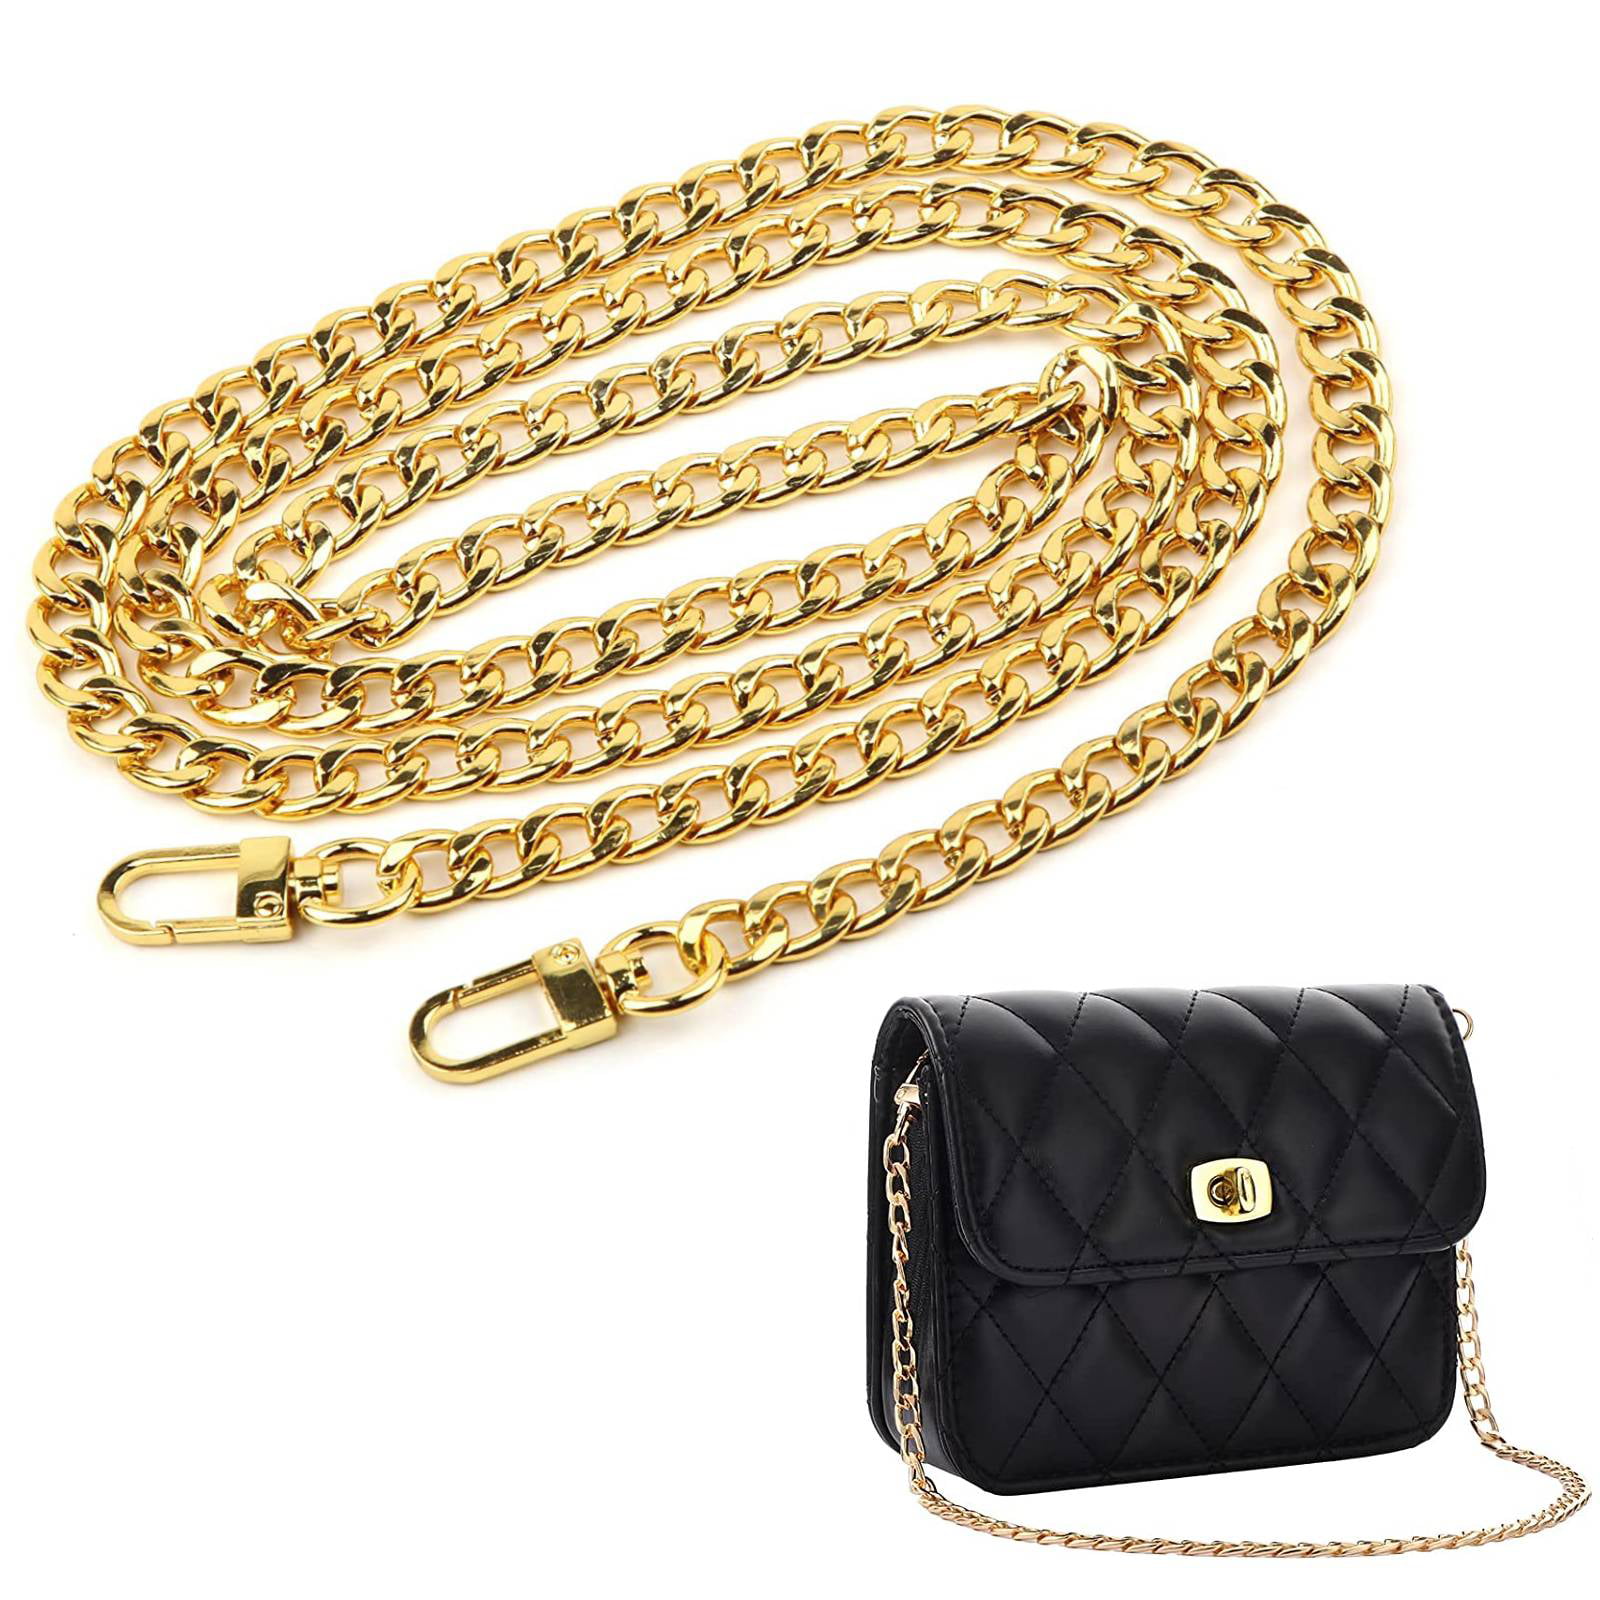 Woman Tote Bag Shoulder Handbag Vintage Golden Silver Chains for Work Travel Business Beach Shopping School 